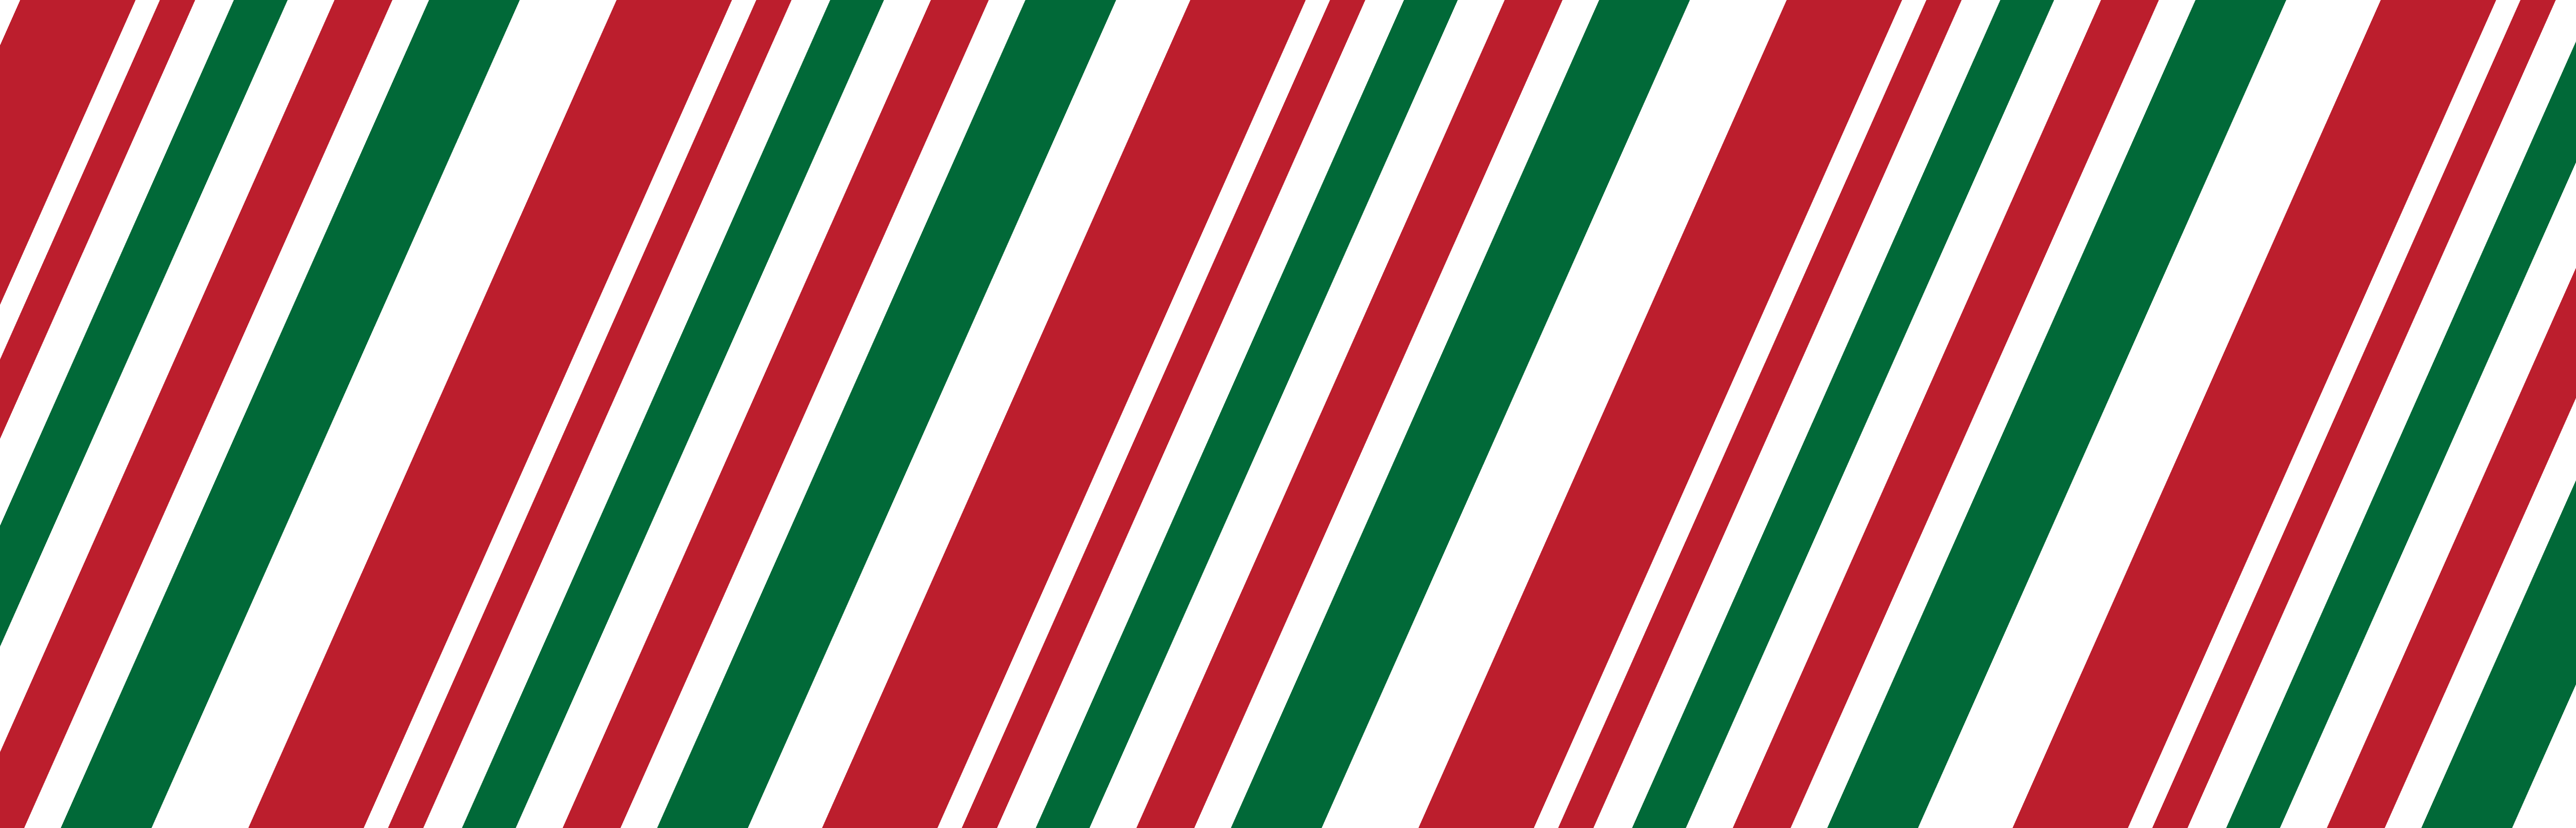 Christmas portal background - stripe pattern